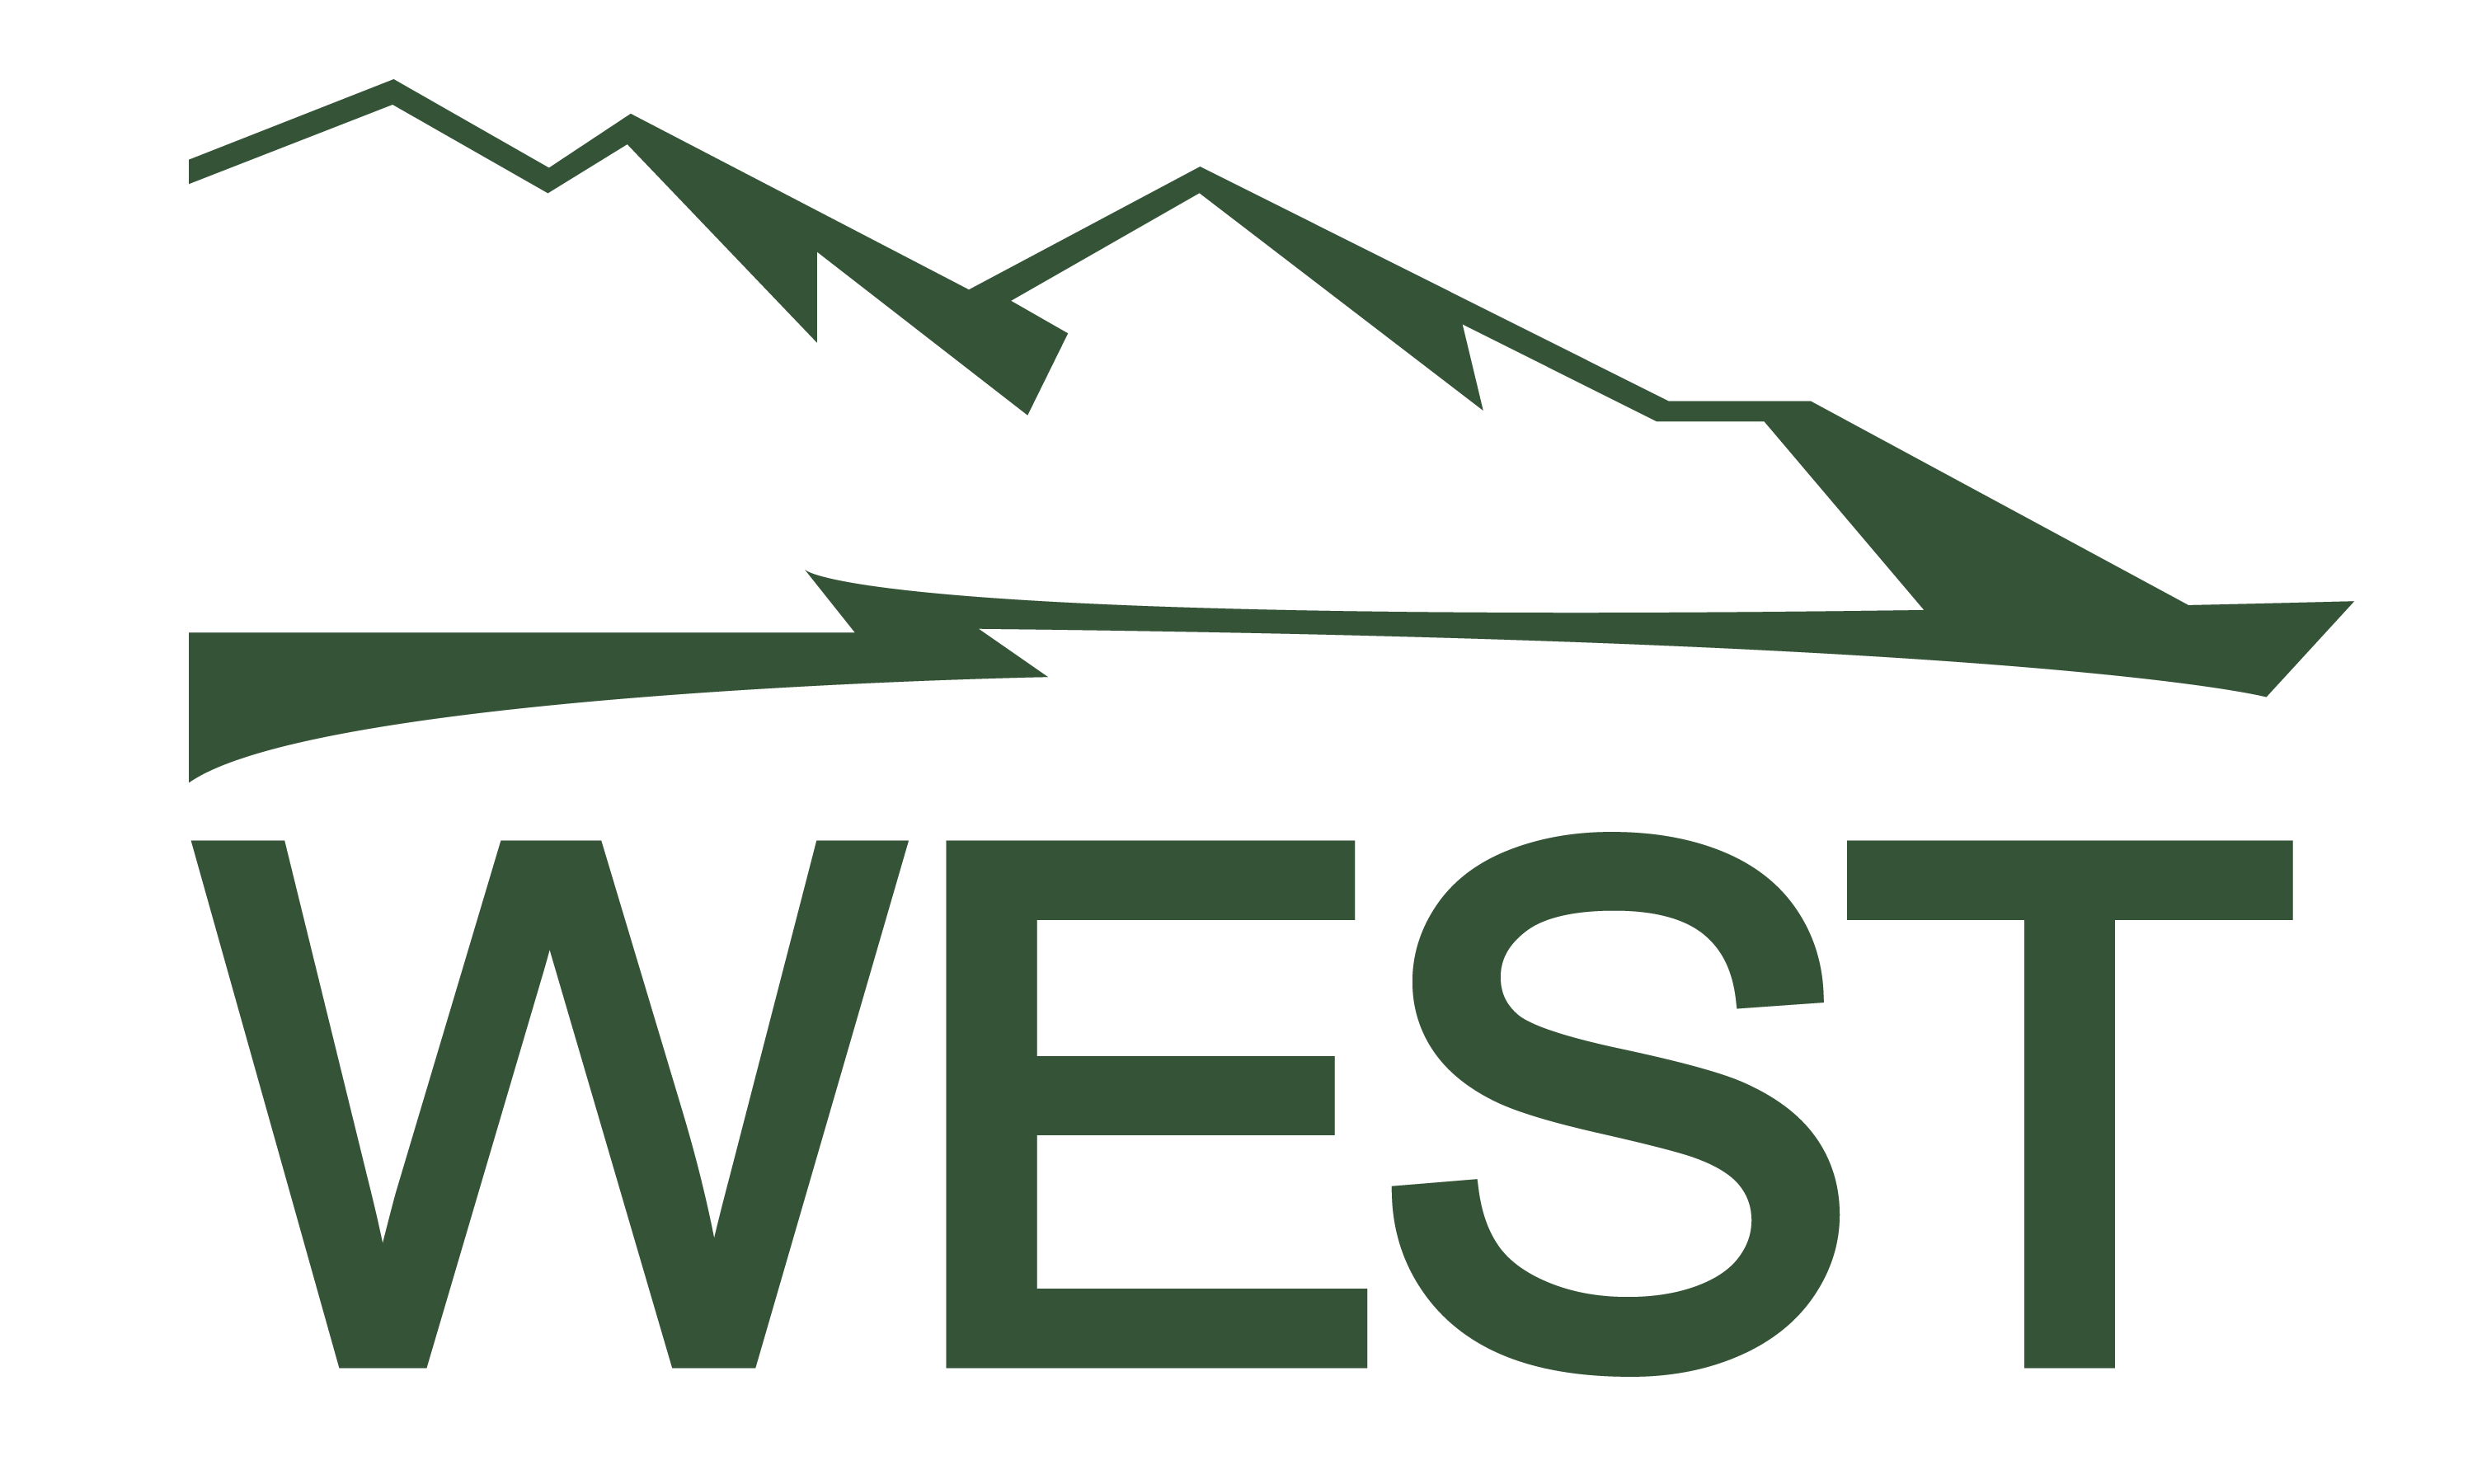 WEST logo